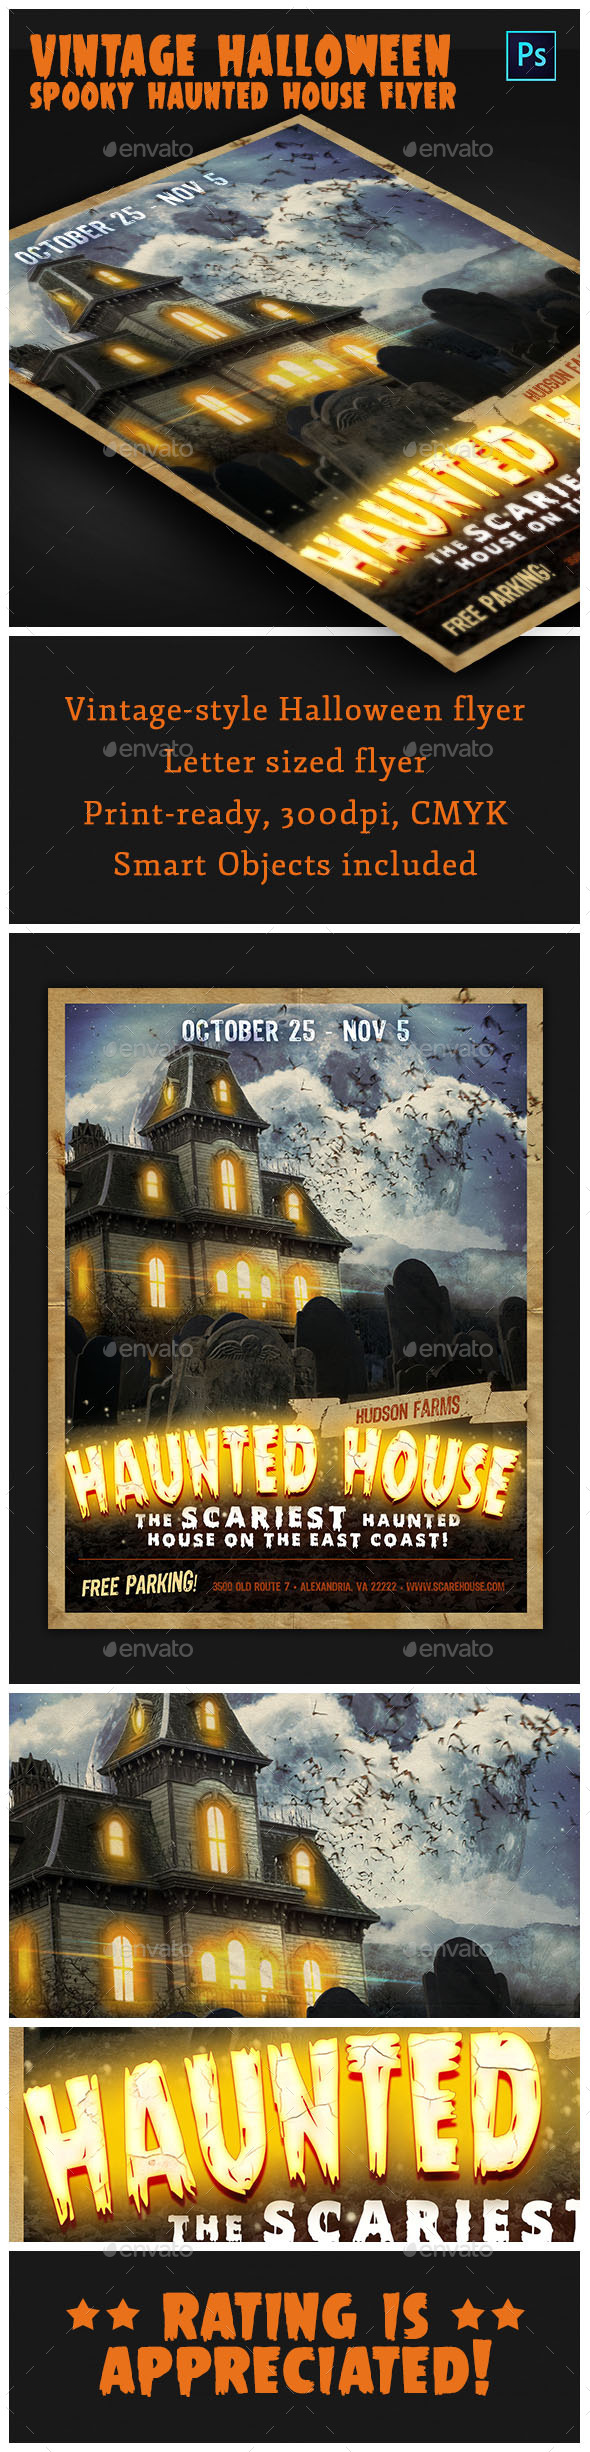 Vintage Halloween Flyer — Haunted House